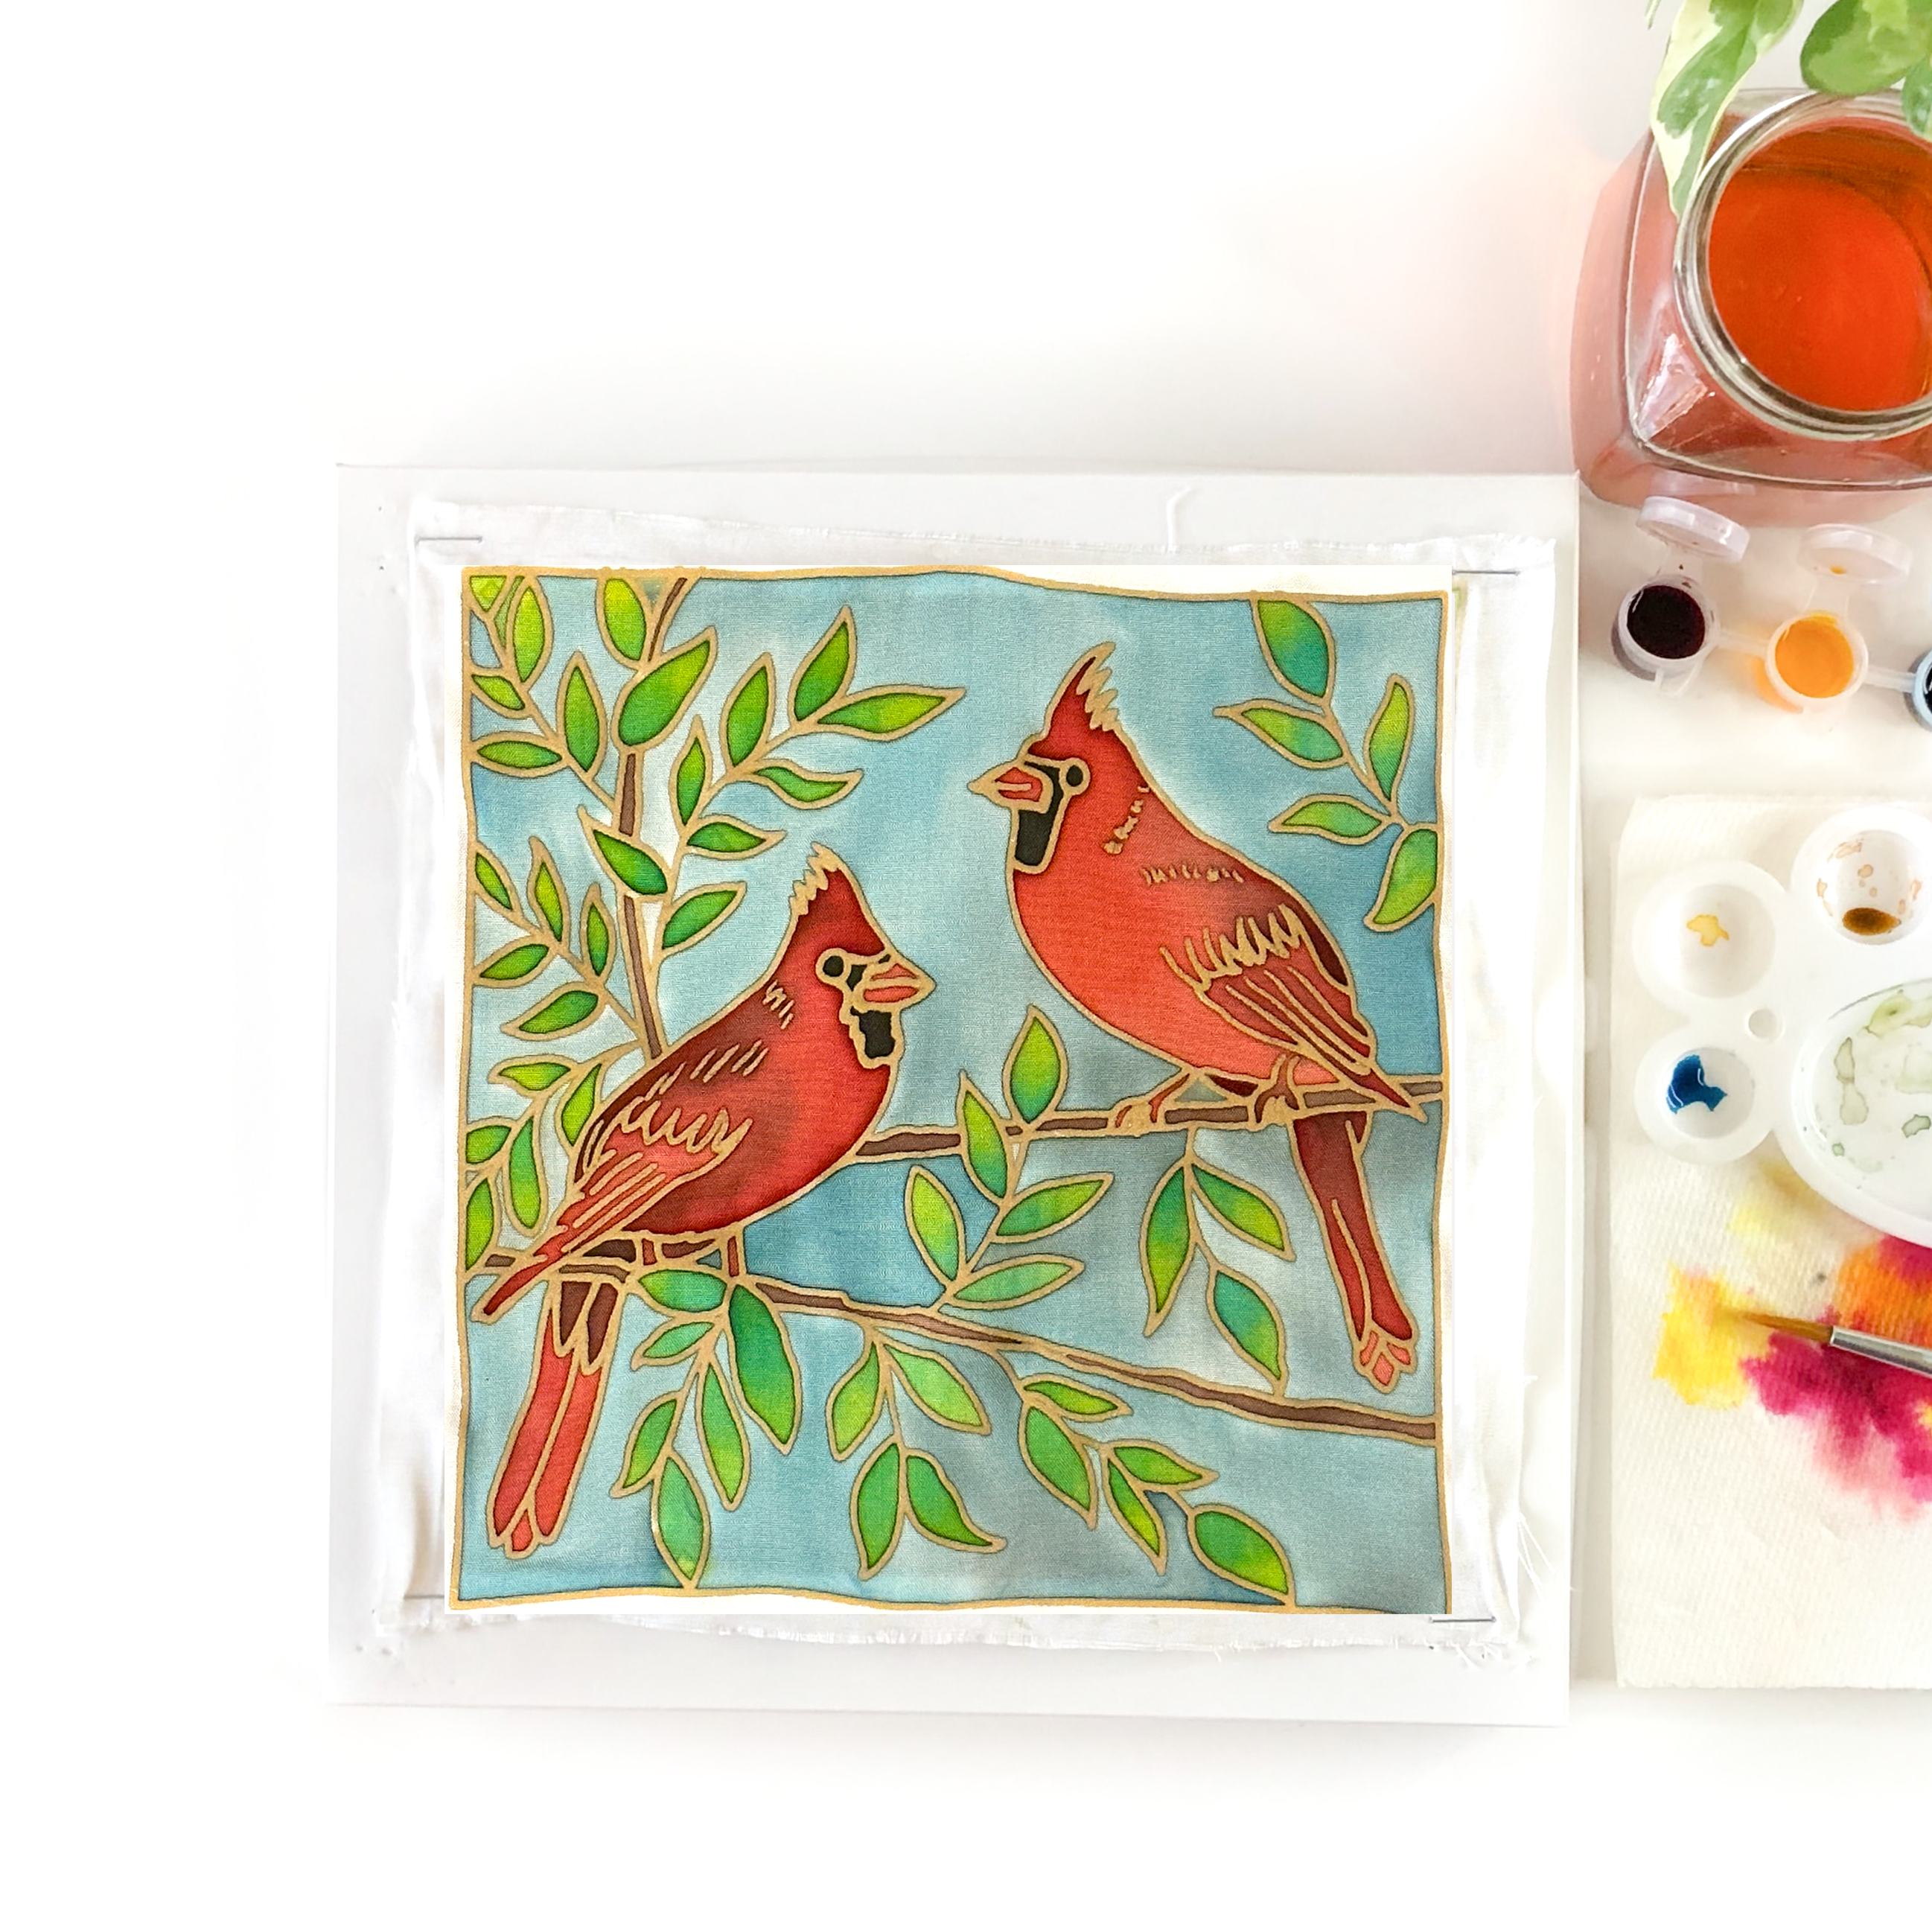 DIY Batik Red Cardinal Fabric Painting Kit - 8x8 Inch Pre Drawn Wax Design, Paint, Brush and Palette